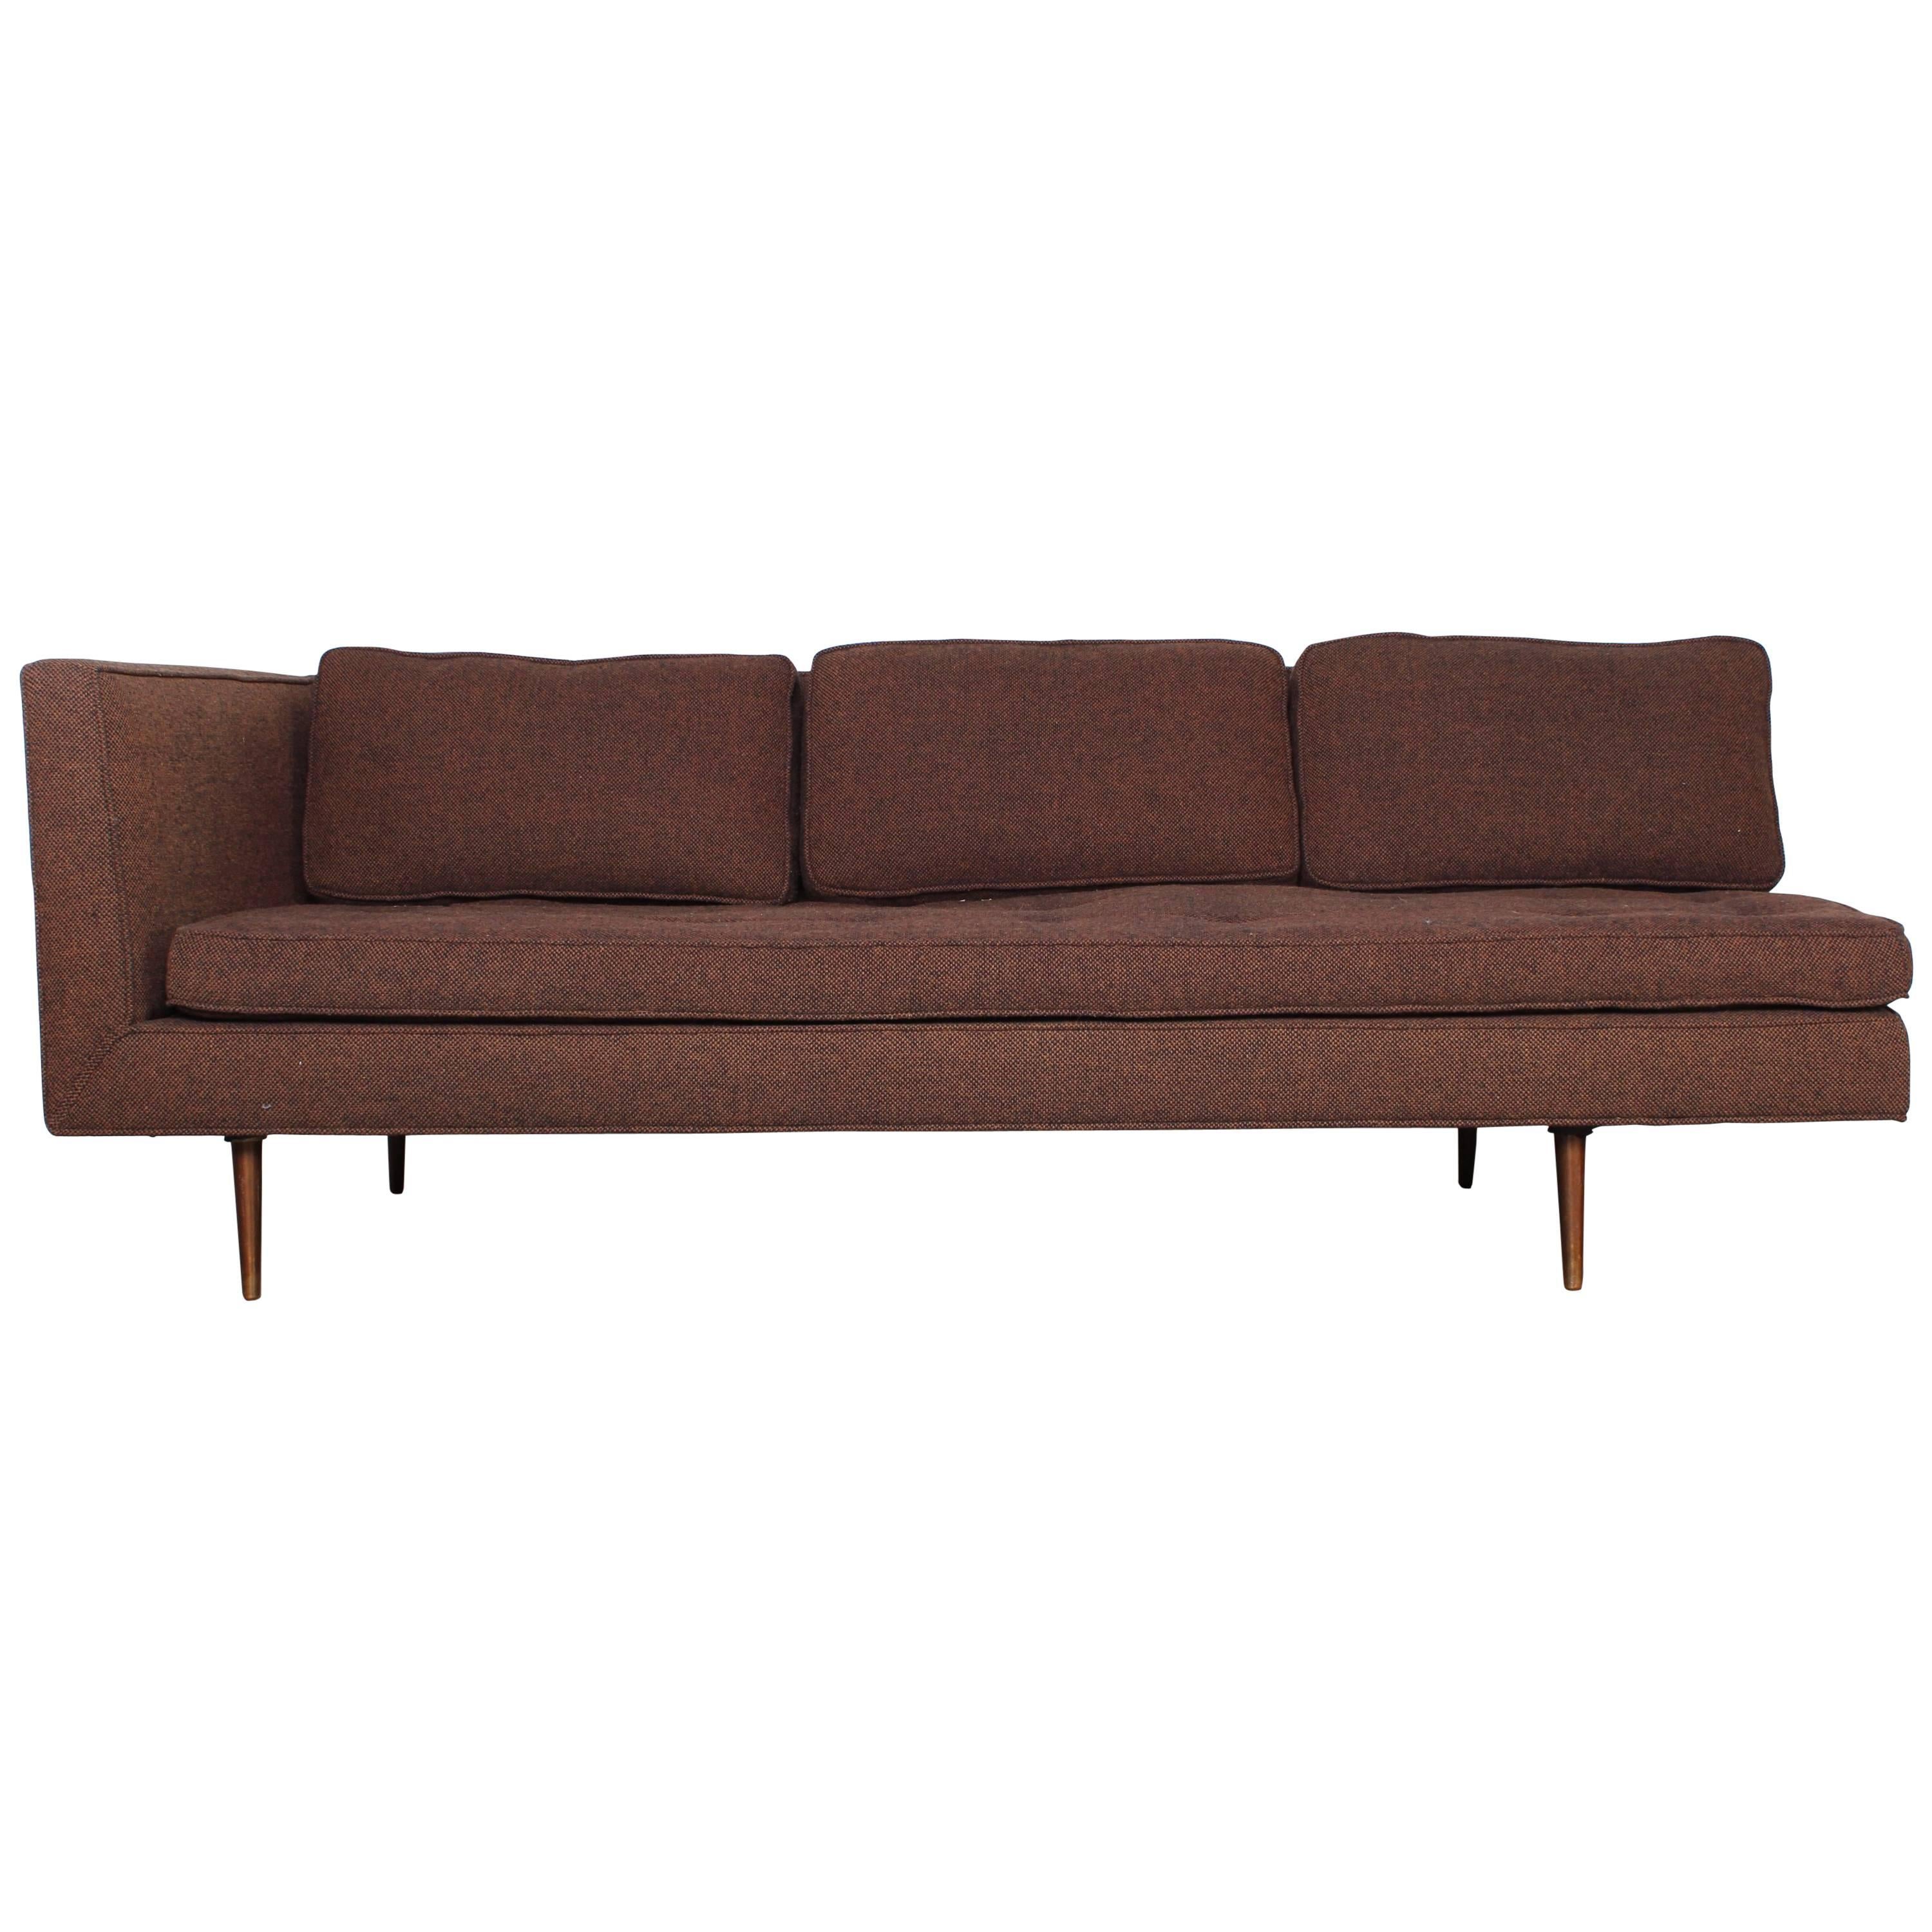 Sofa/Chaise by Edward Wormley for Dunbar For Sale